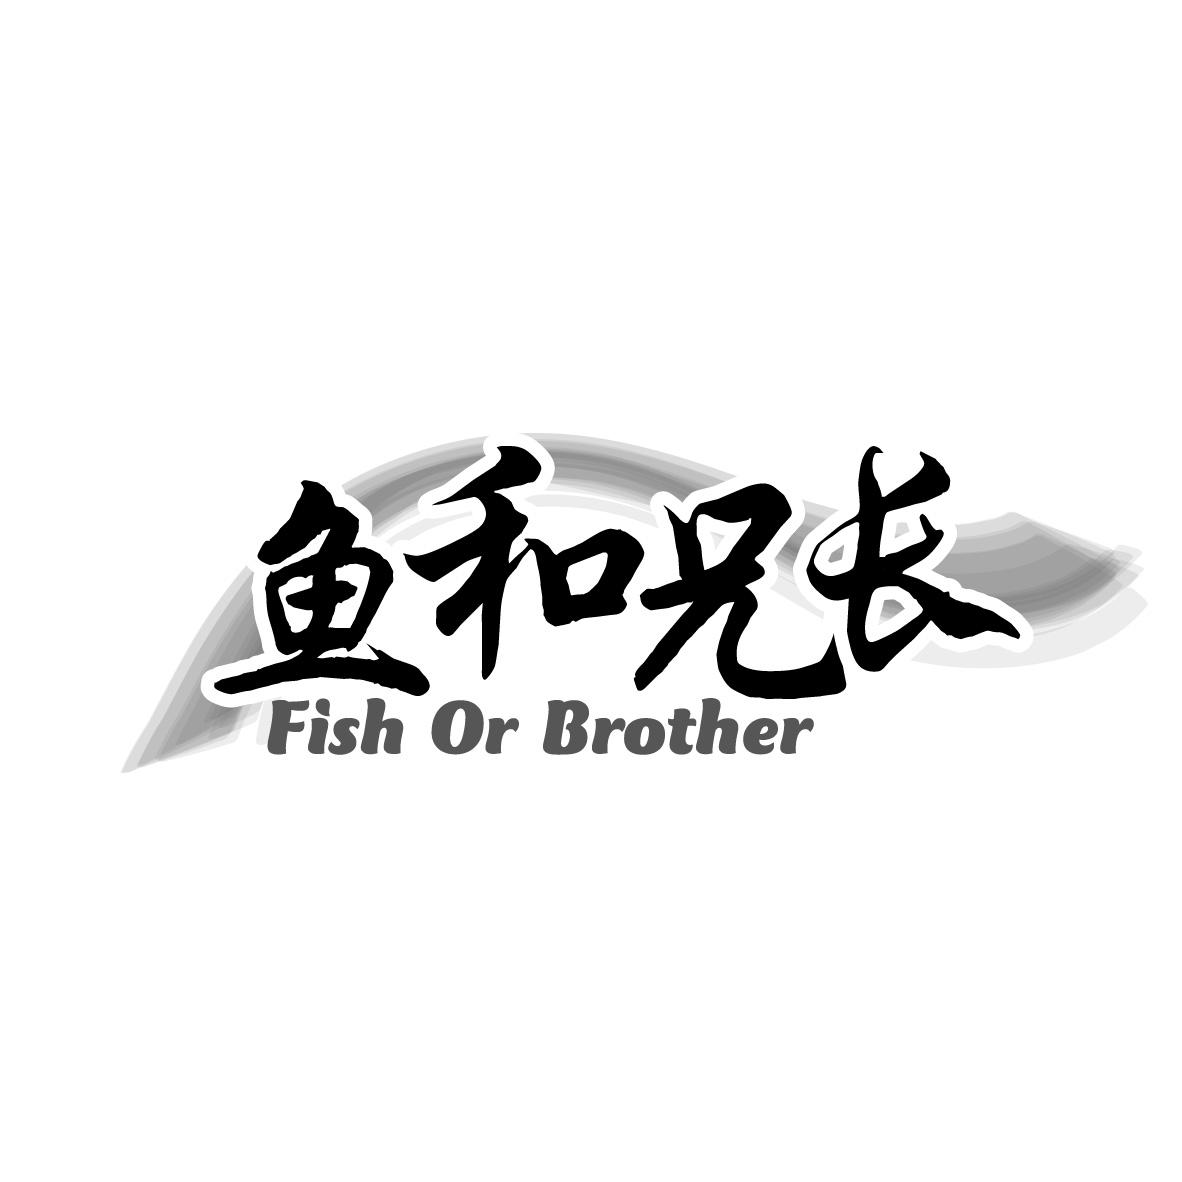 ֳ FISH OR BROTHER